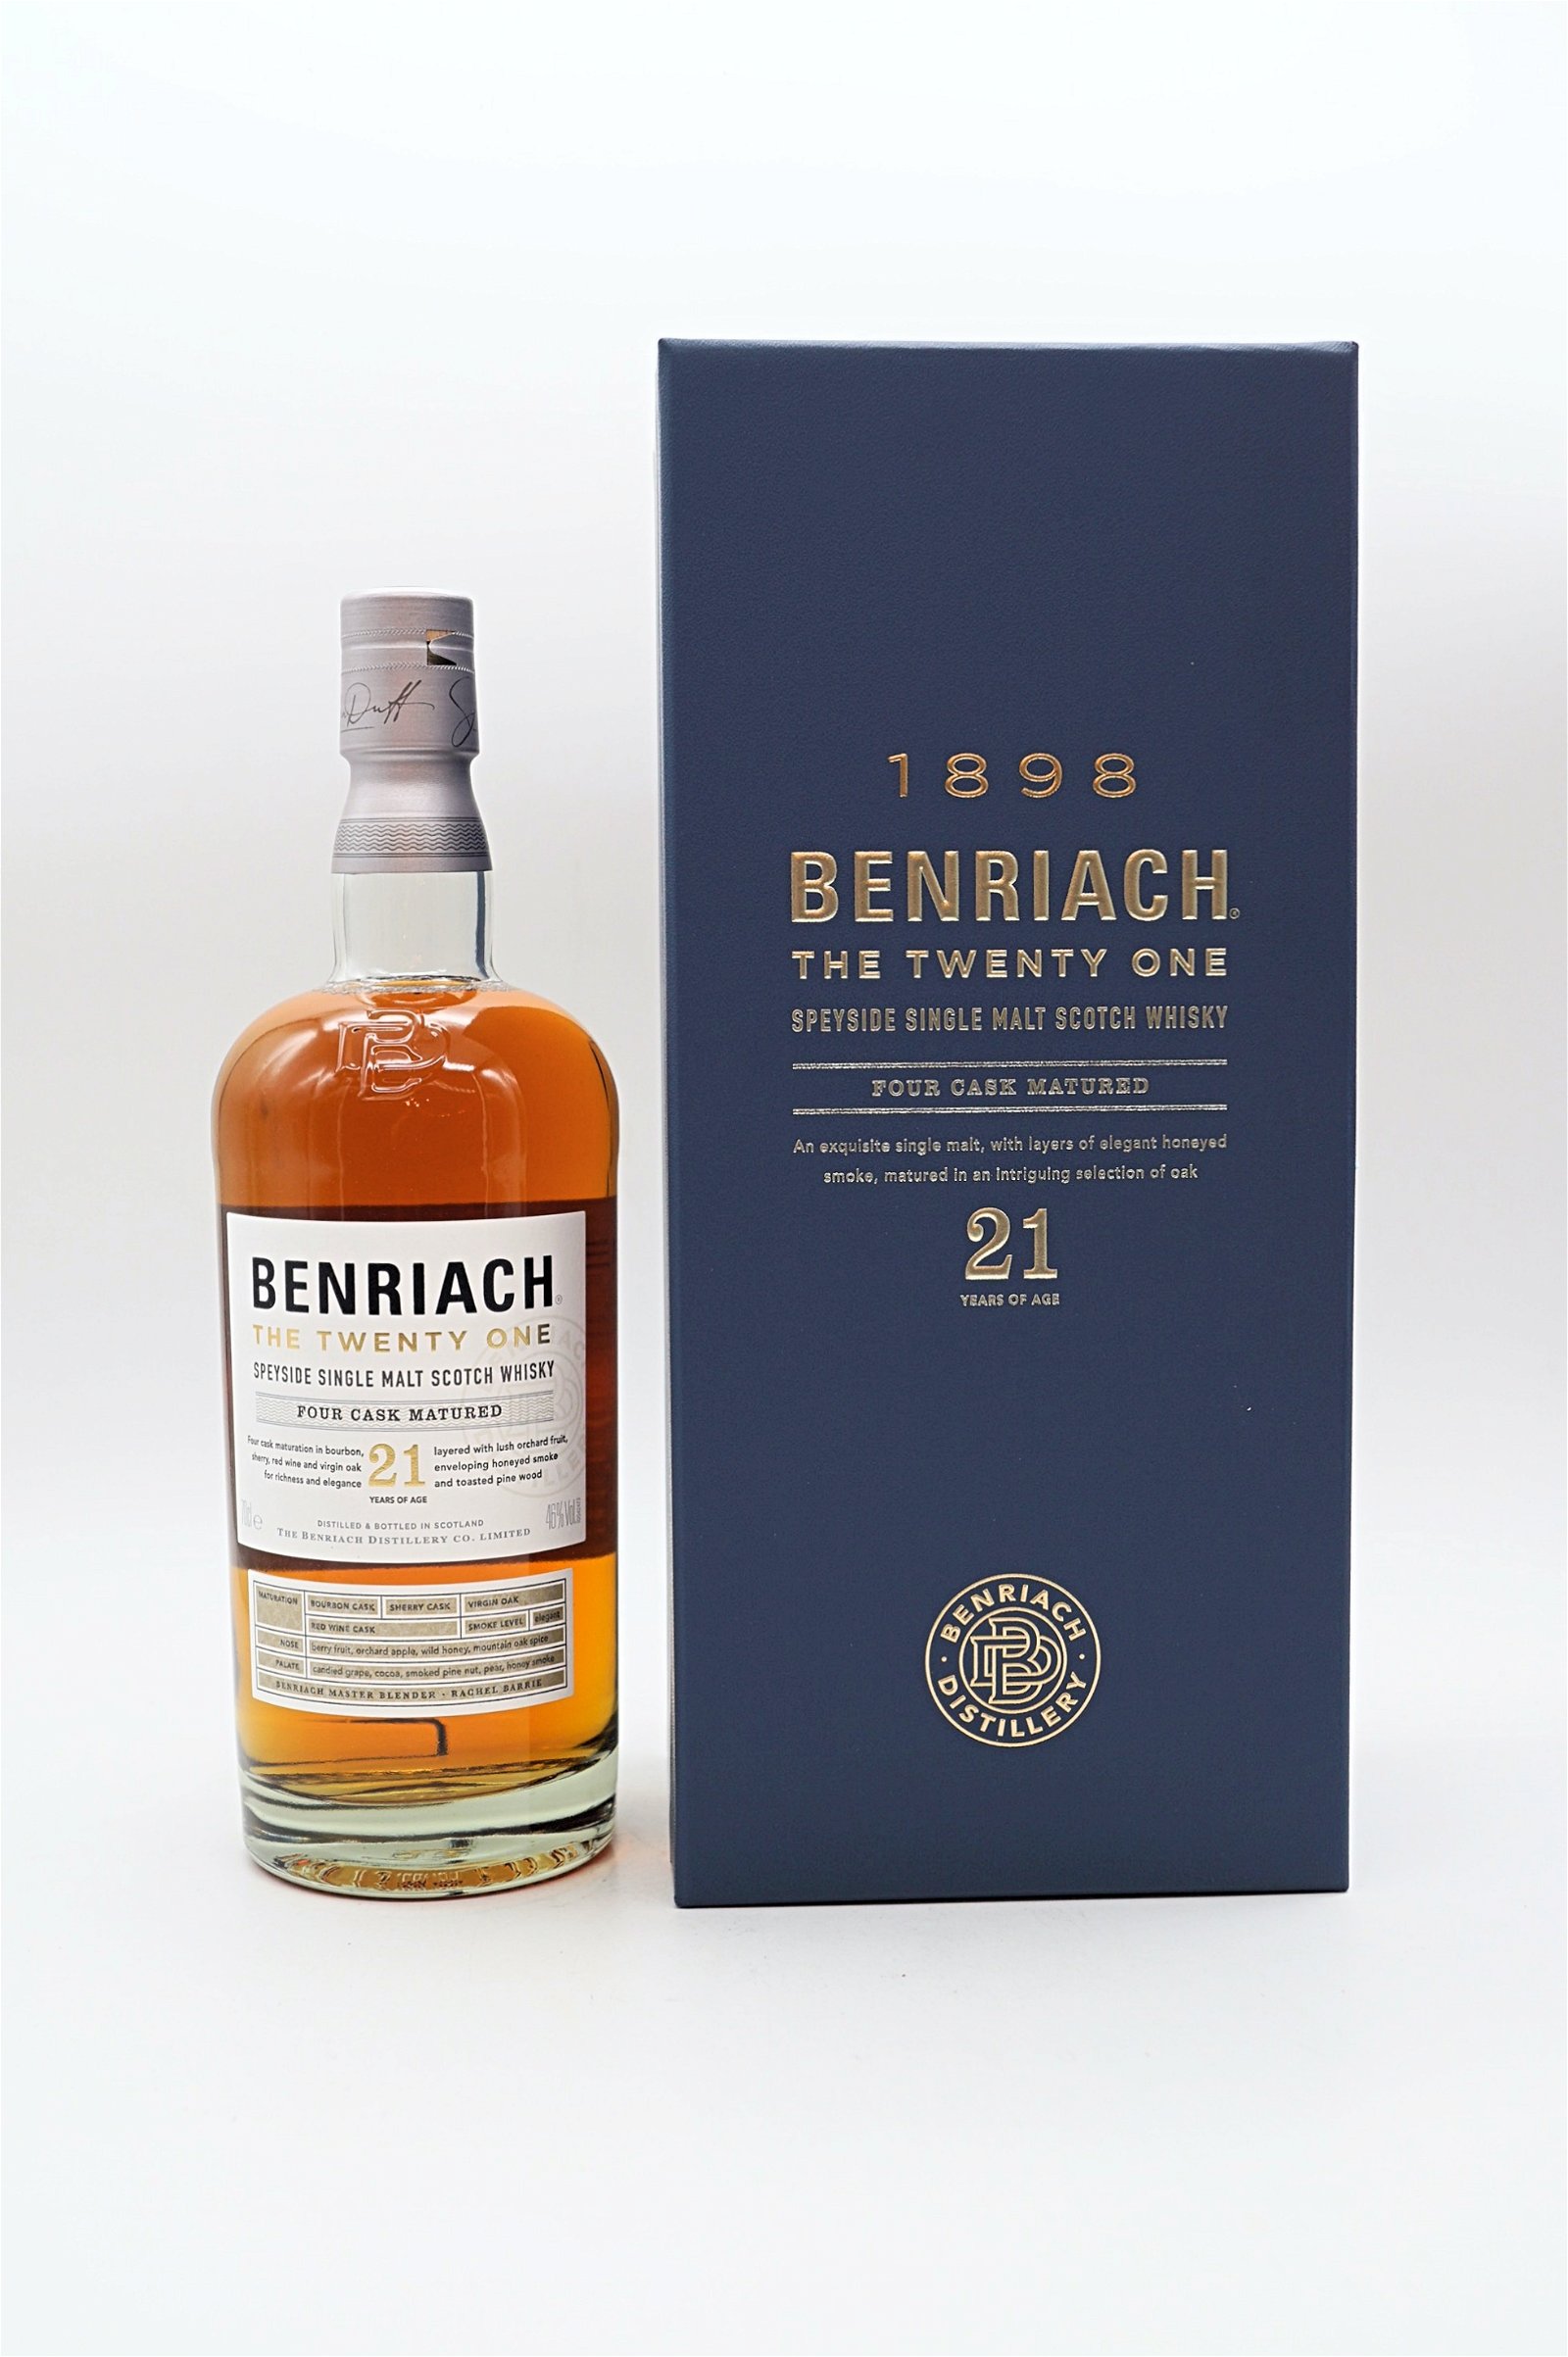 BenRiach 1898 The Twenty One Four Cask Matured Speyside Single Malt Scotch Whisky